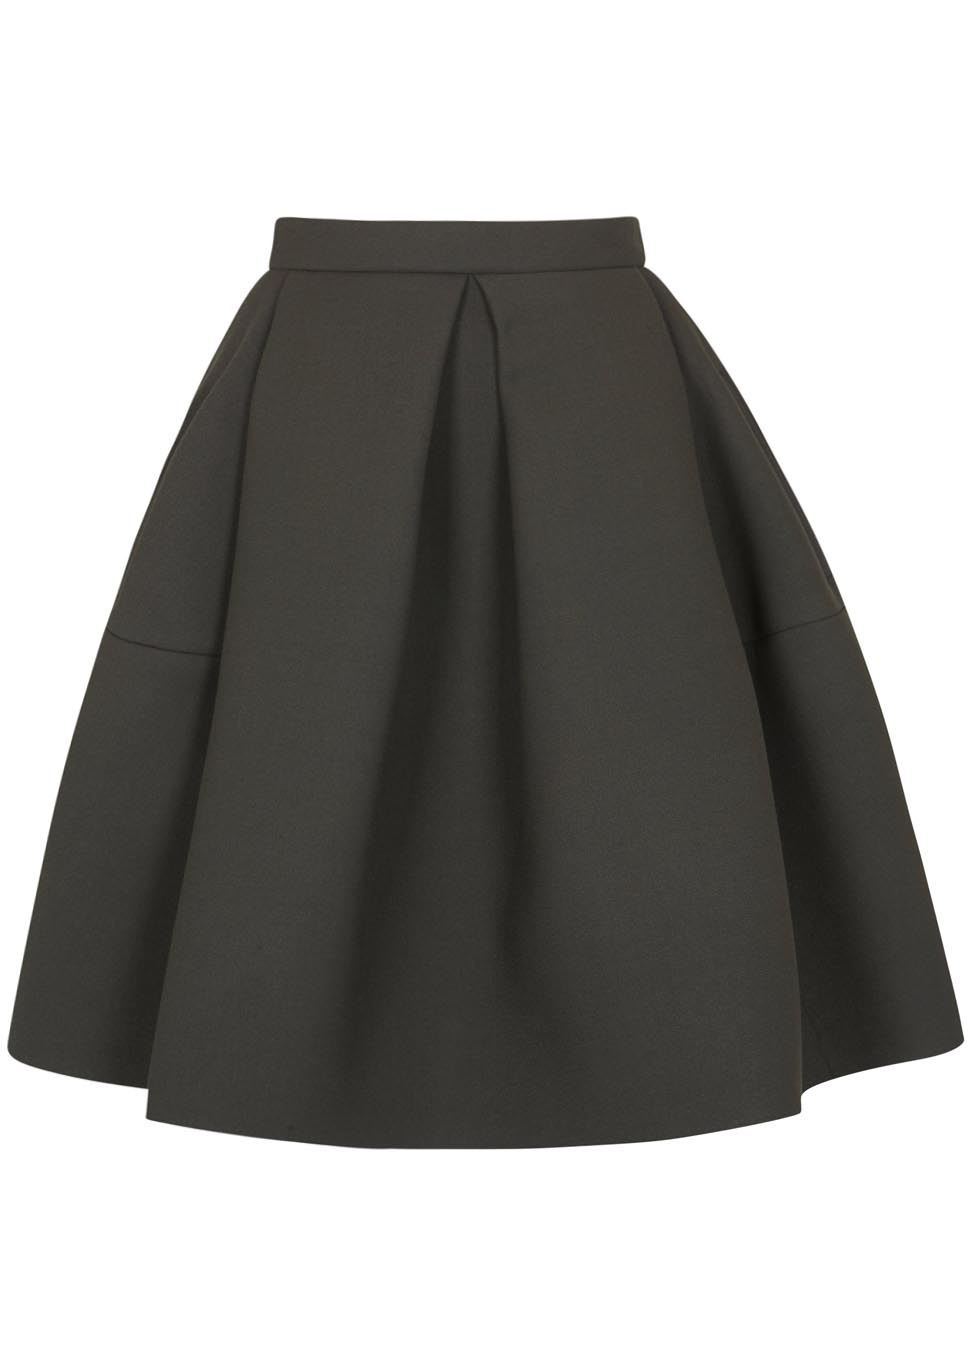 Dark olive bonded crepe skirt